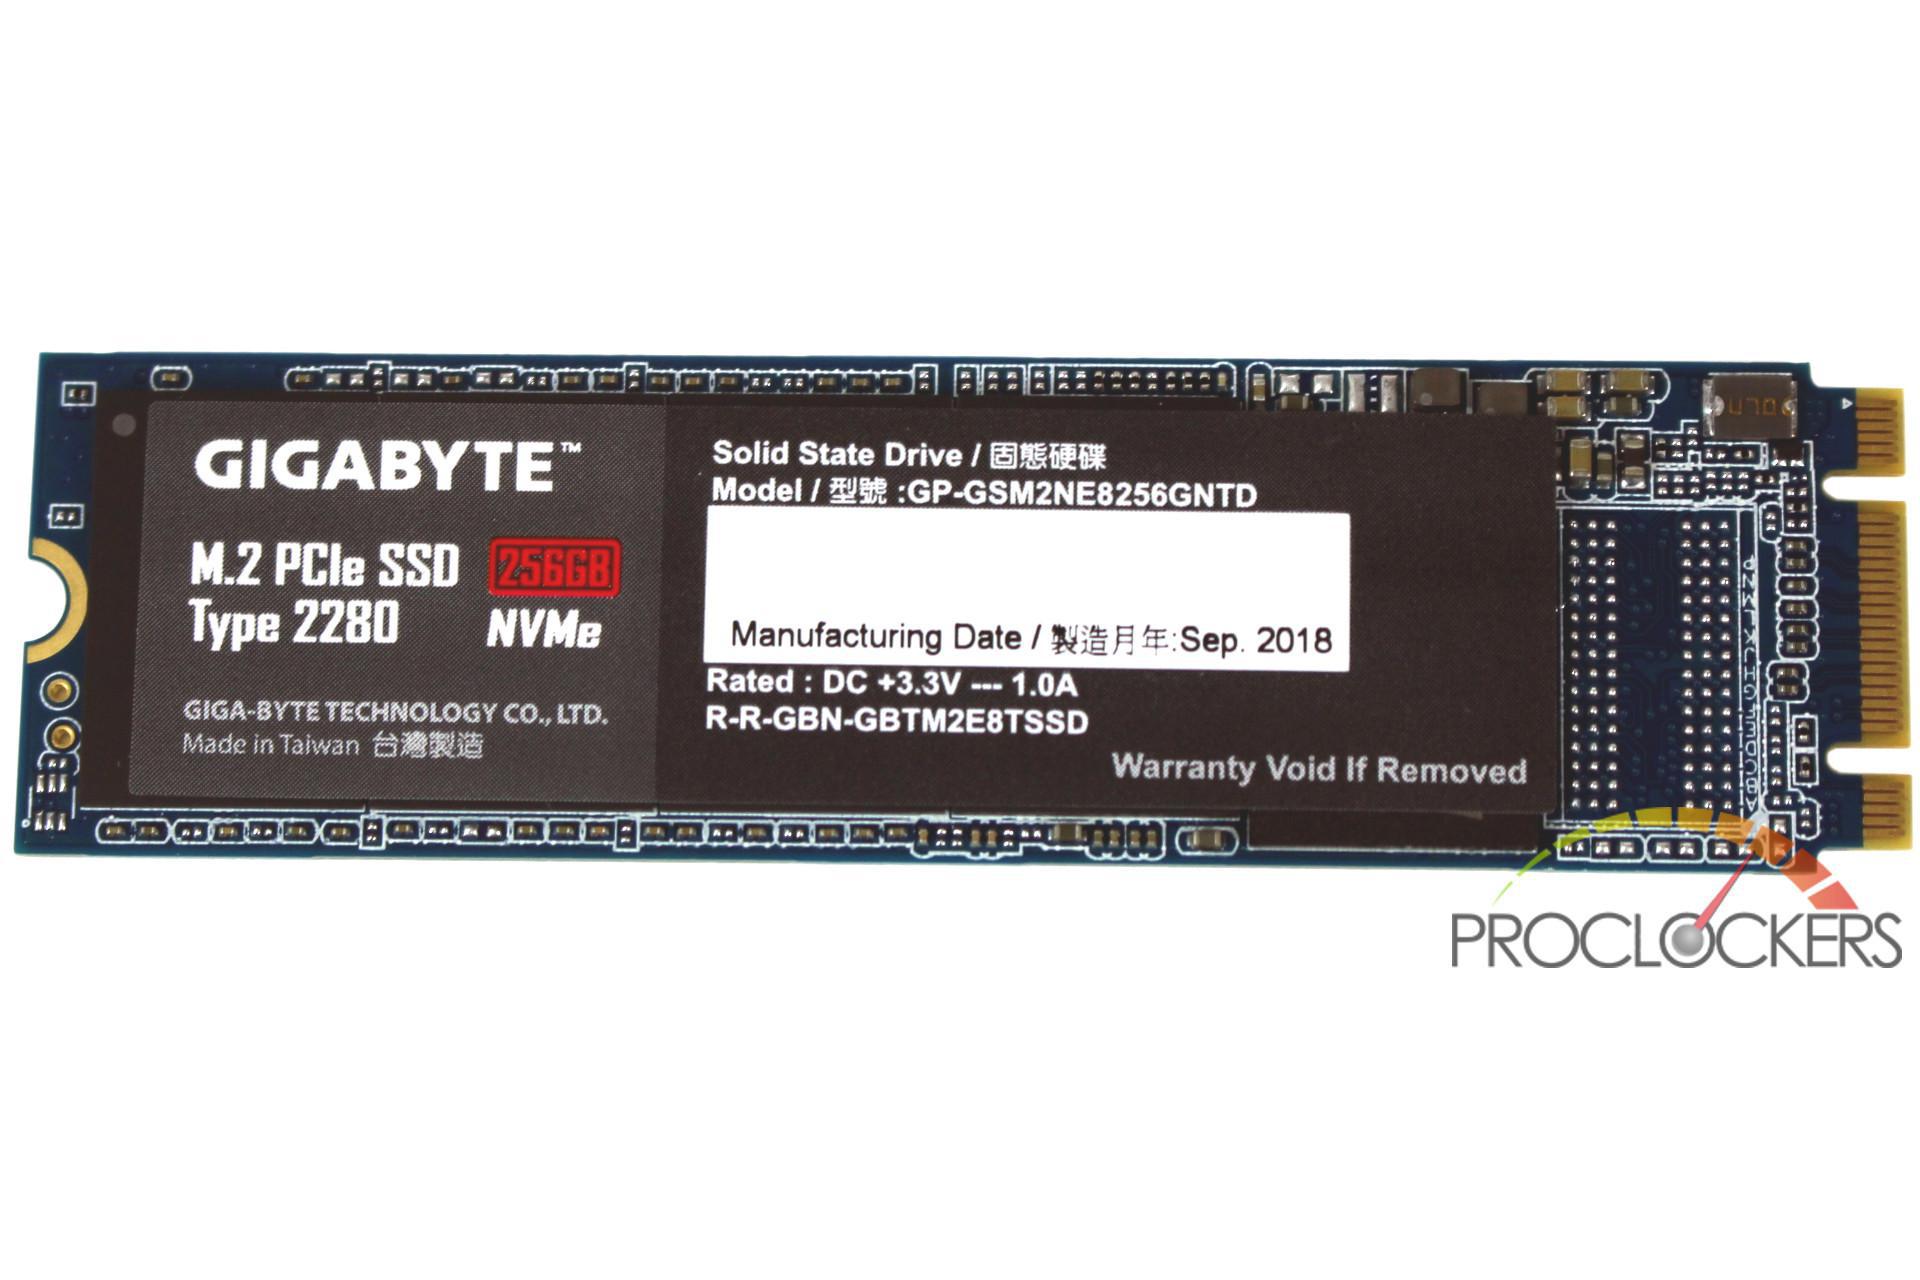 GIGABYTE M.2 2280 PCIe SSD 256GB Review Gaming Gorilla